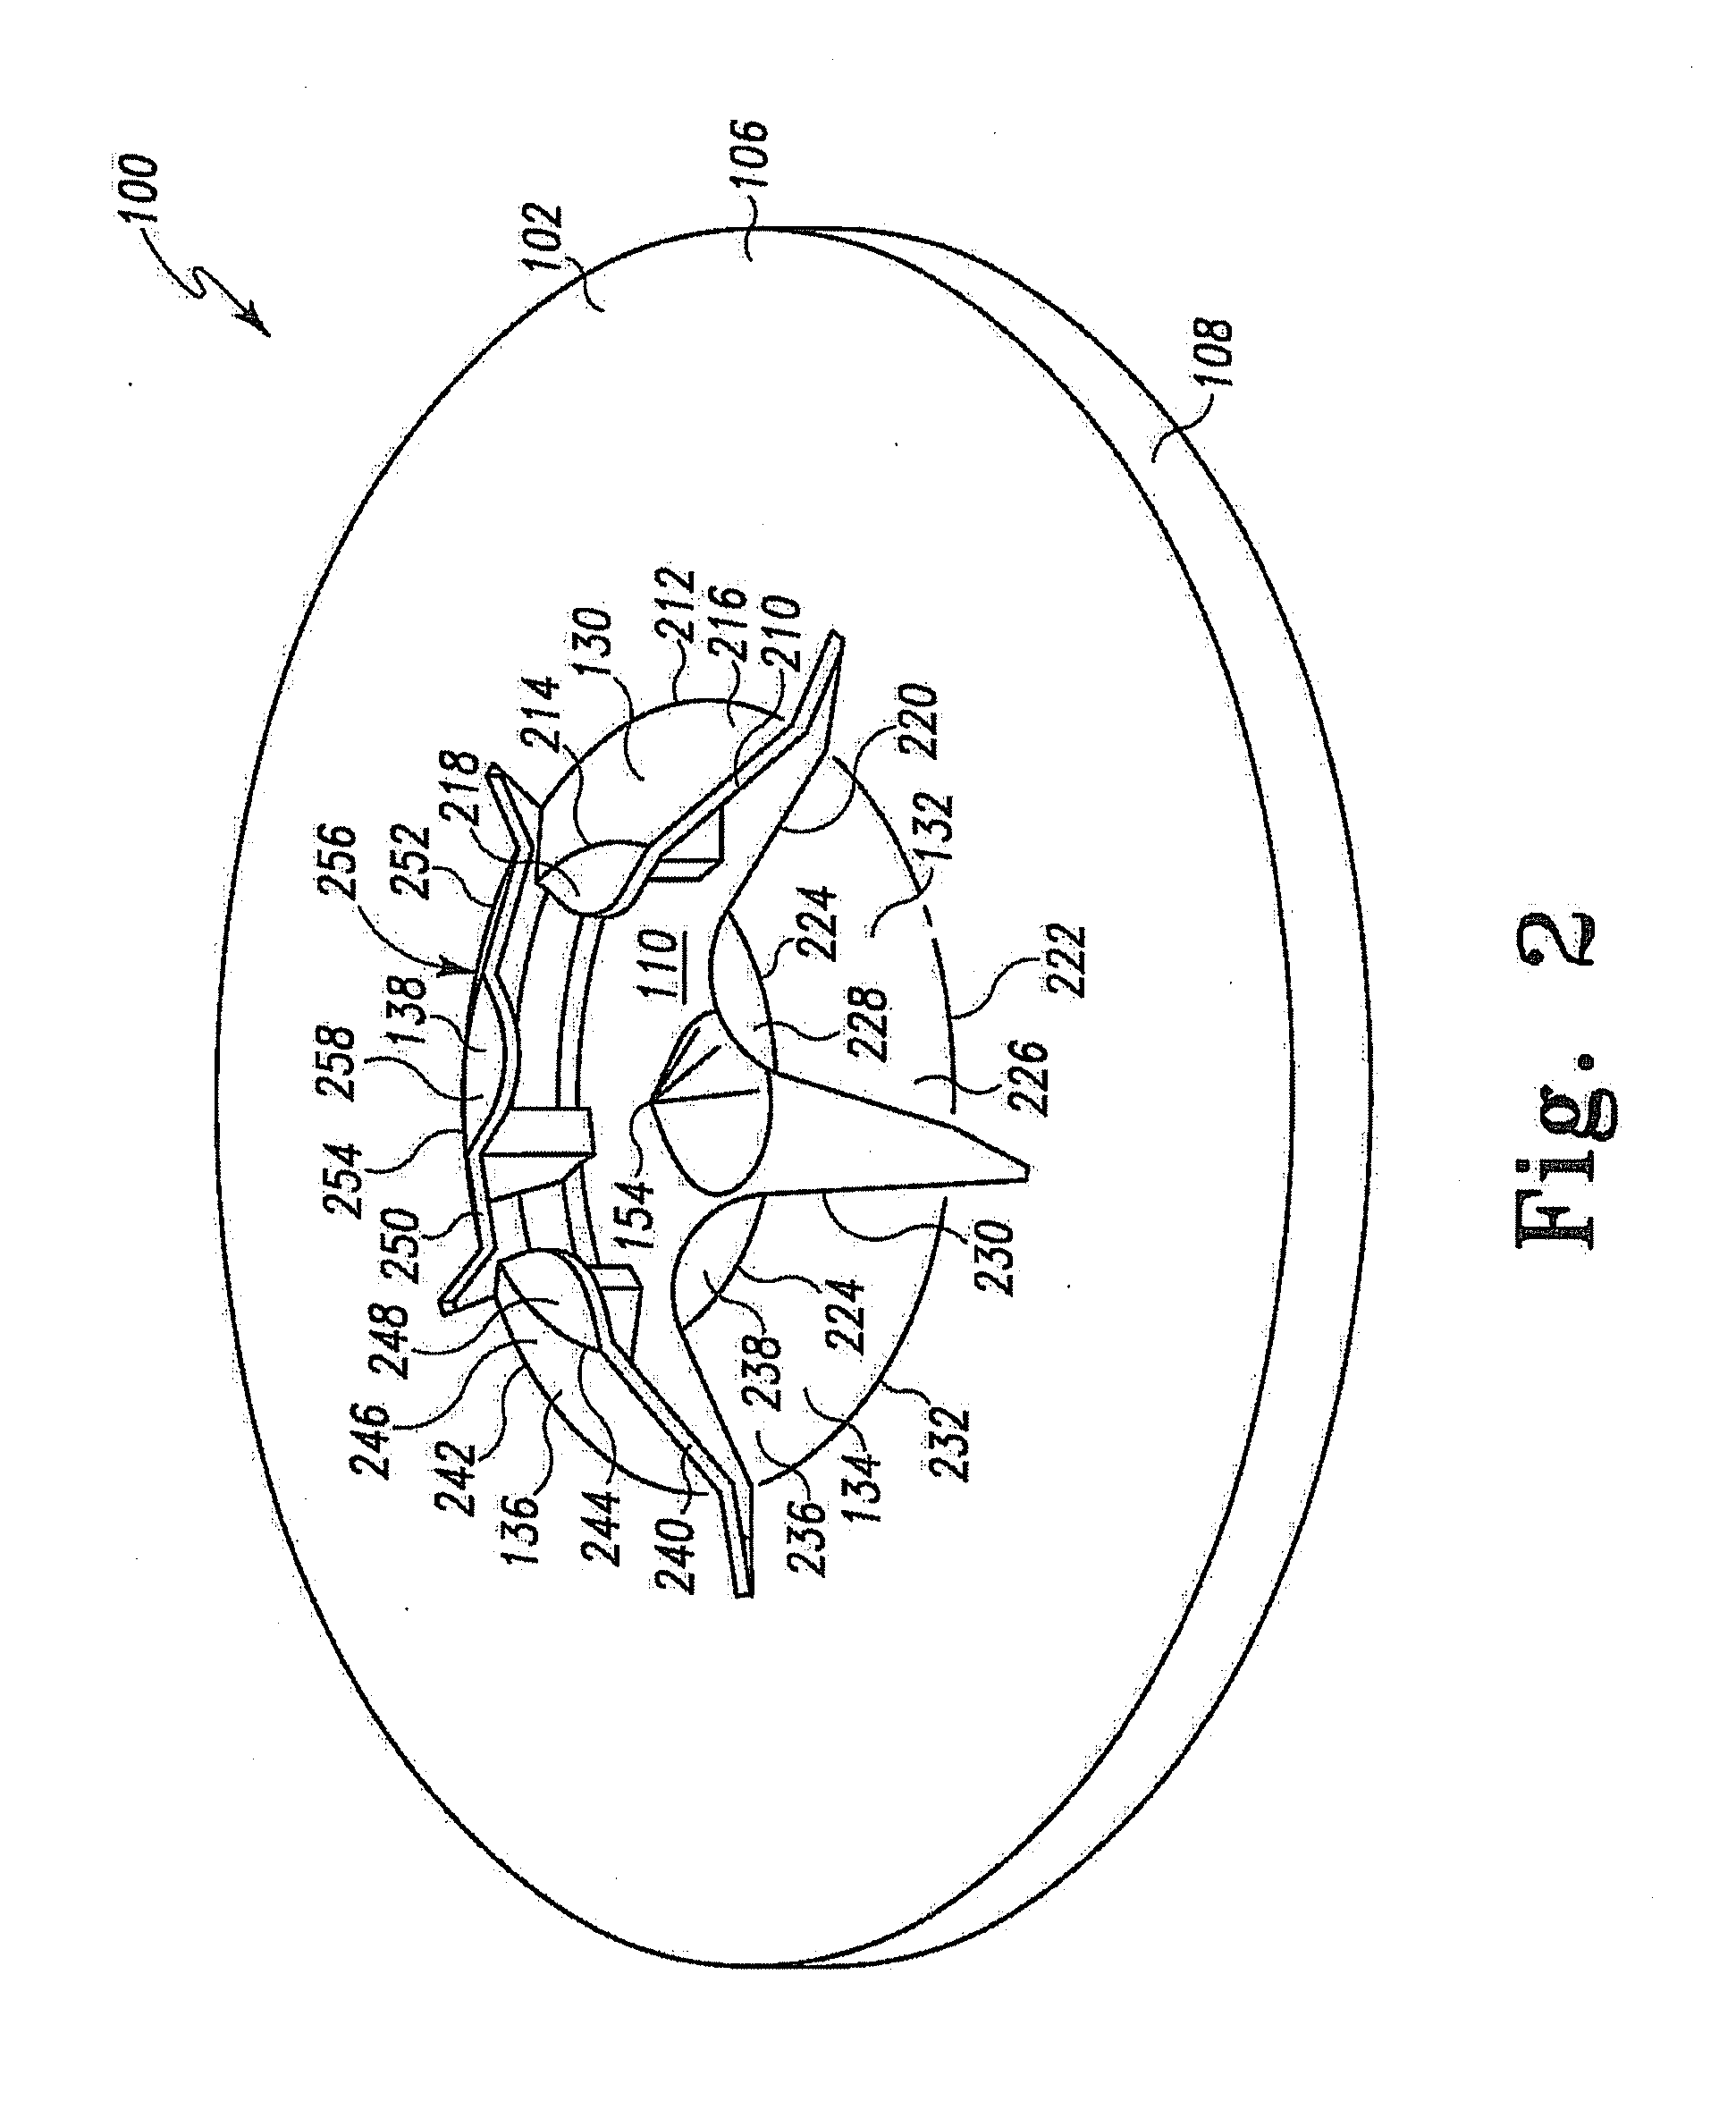 Phase plug and acoustic lens for direct radiating loudspeaker